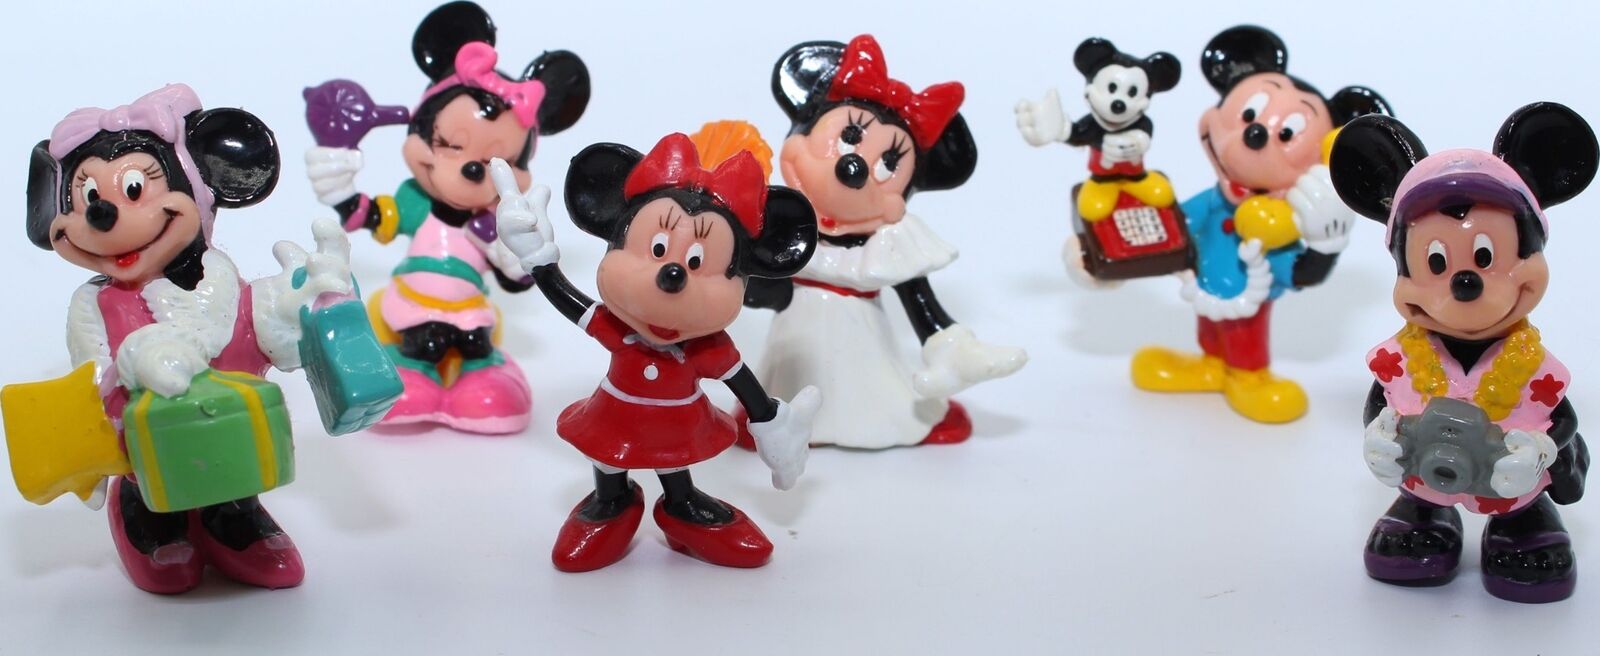 Vintage Walt Disney Applause Mickey & Minnie Mouse Action Figure Figurine Lot 6